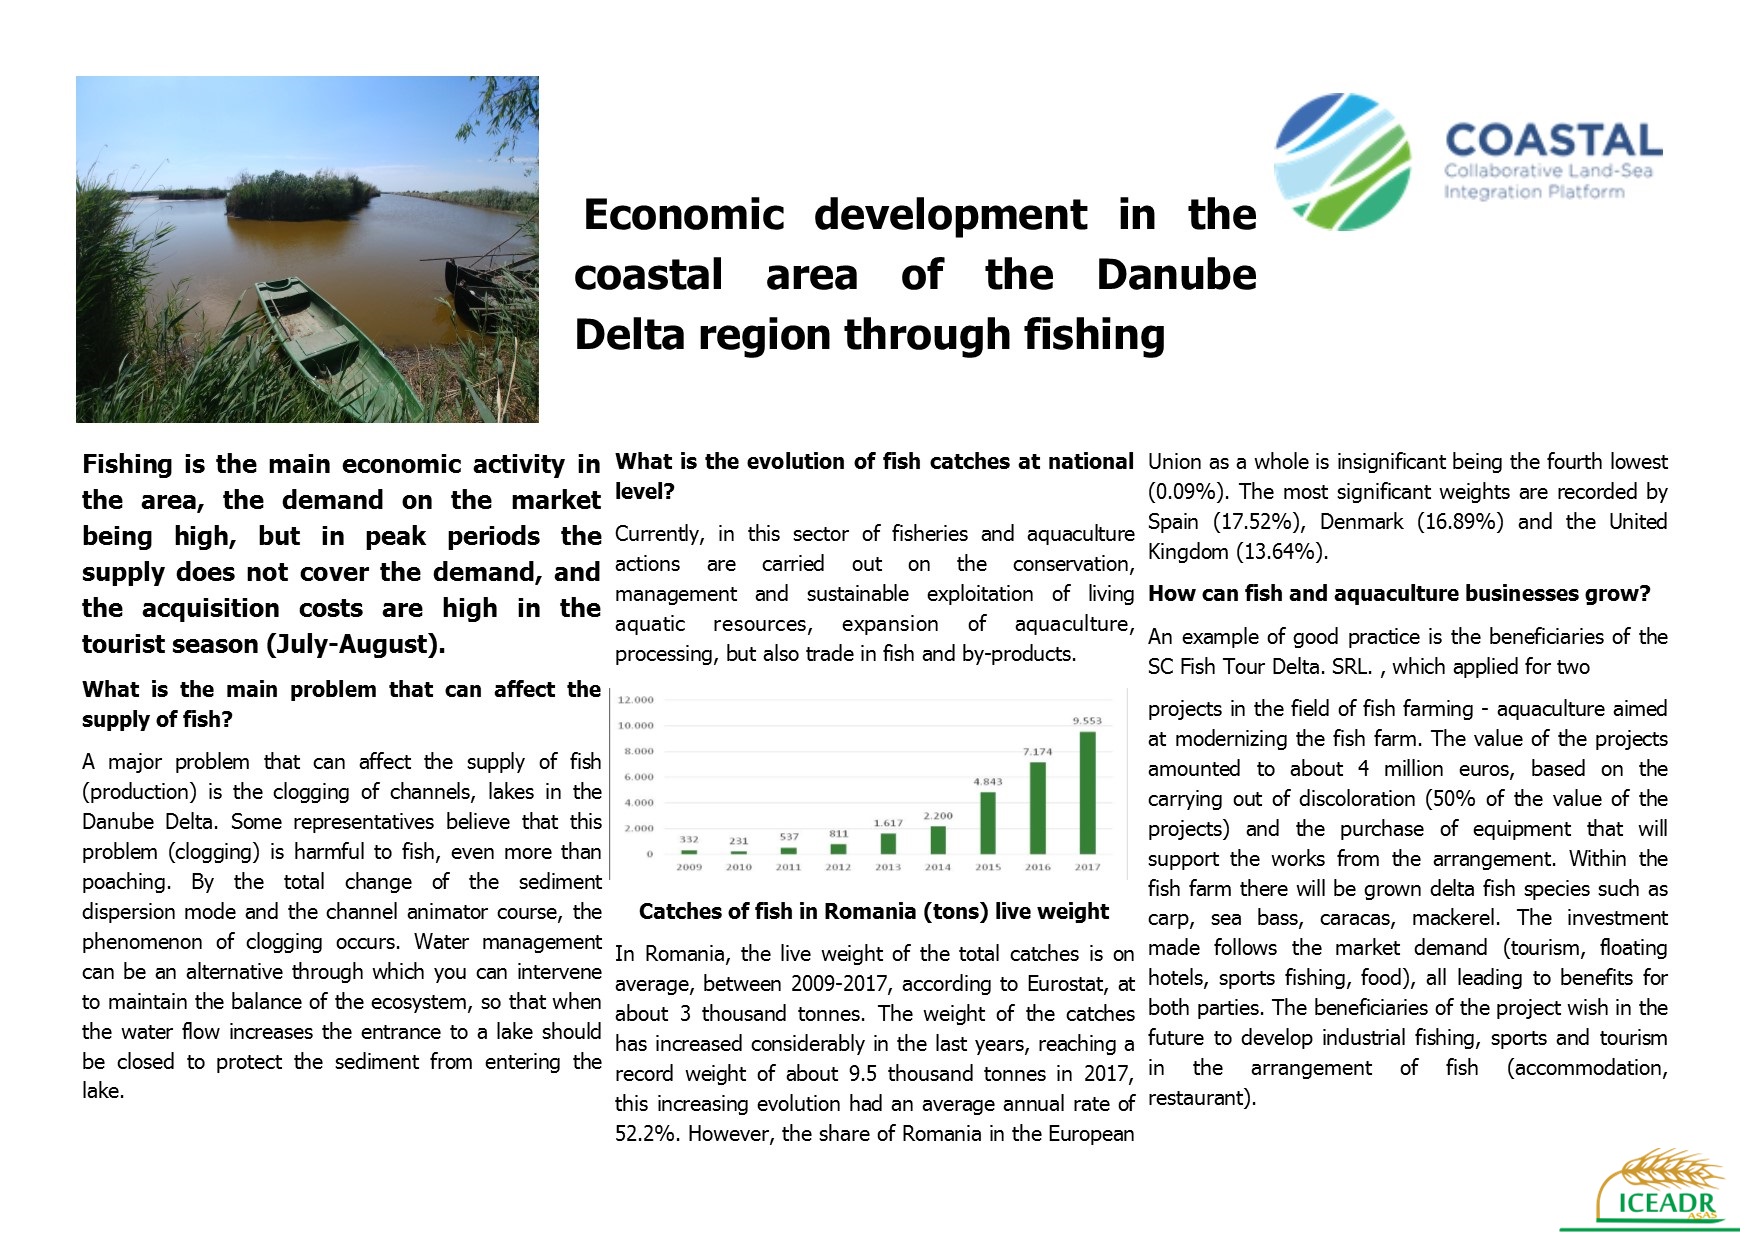 Economic development in the coastal area of the Danube Delta region through fishing